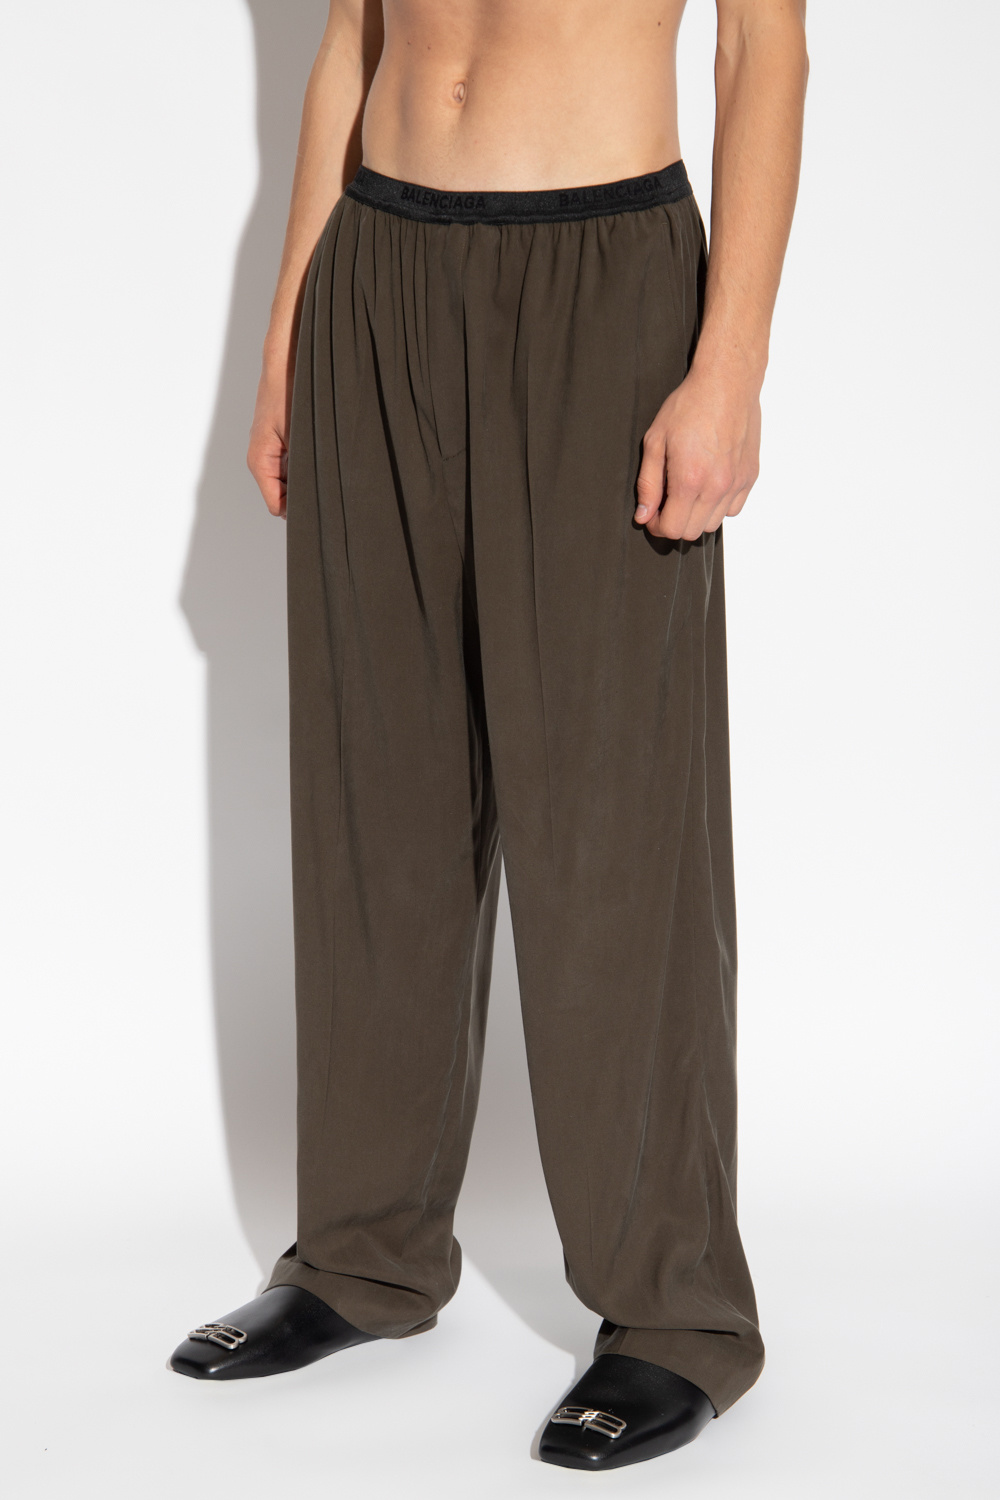 Balenciaga Loose-fitting trousers